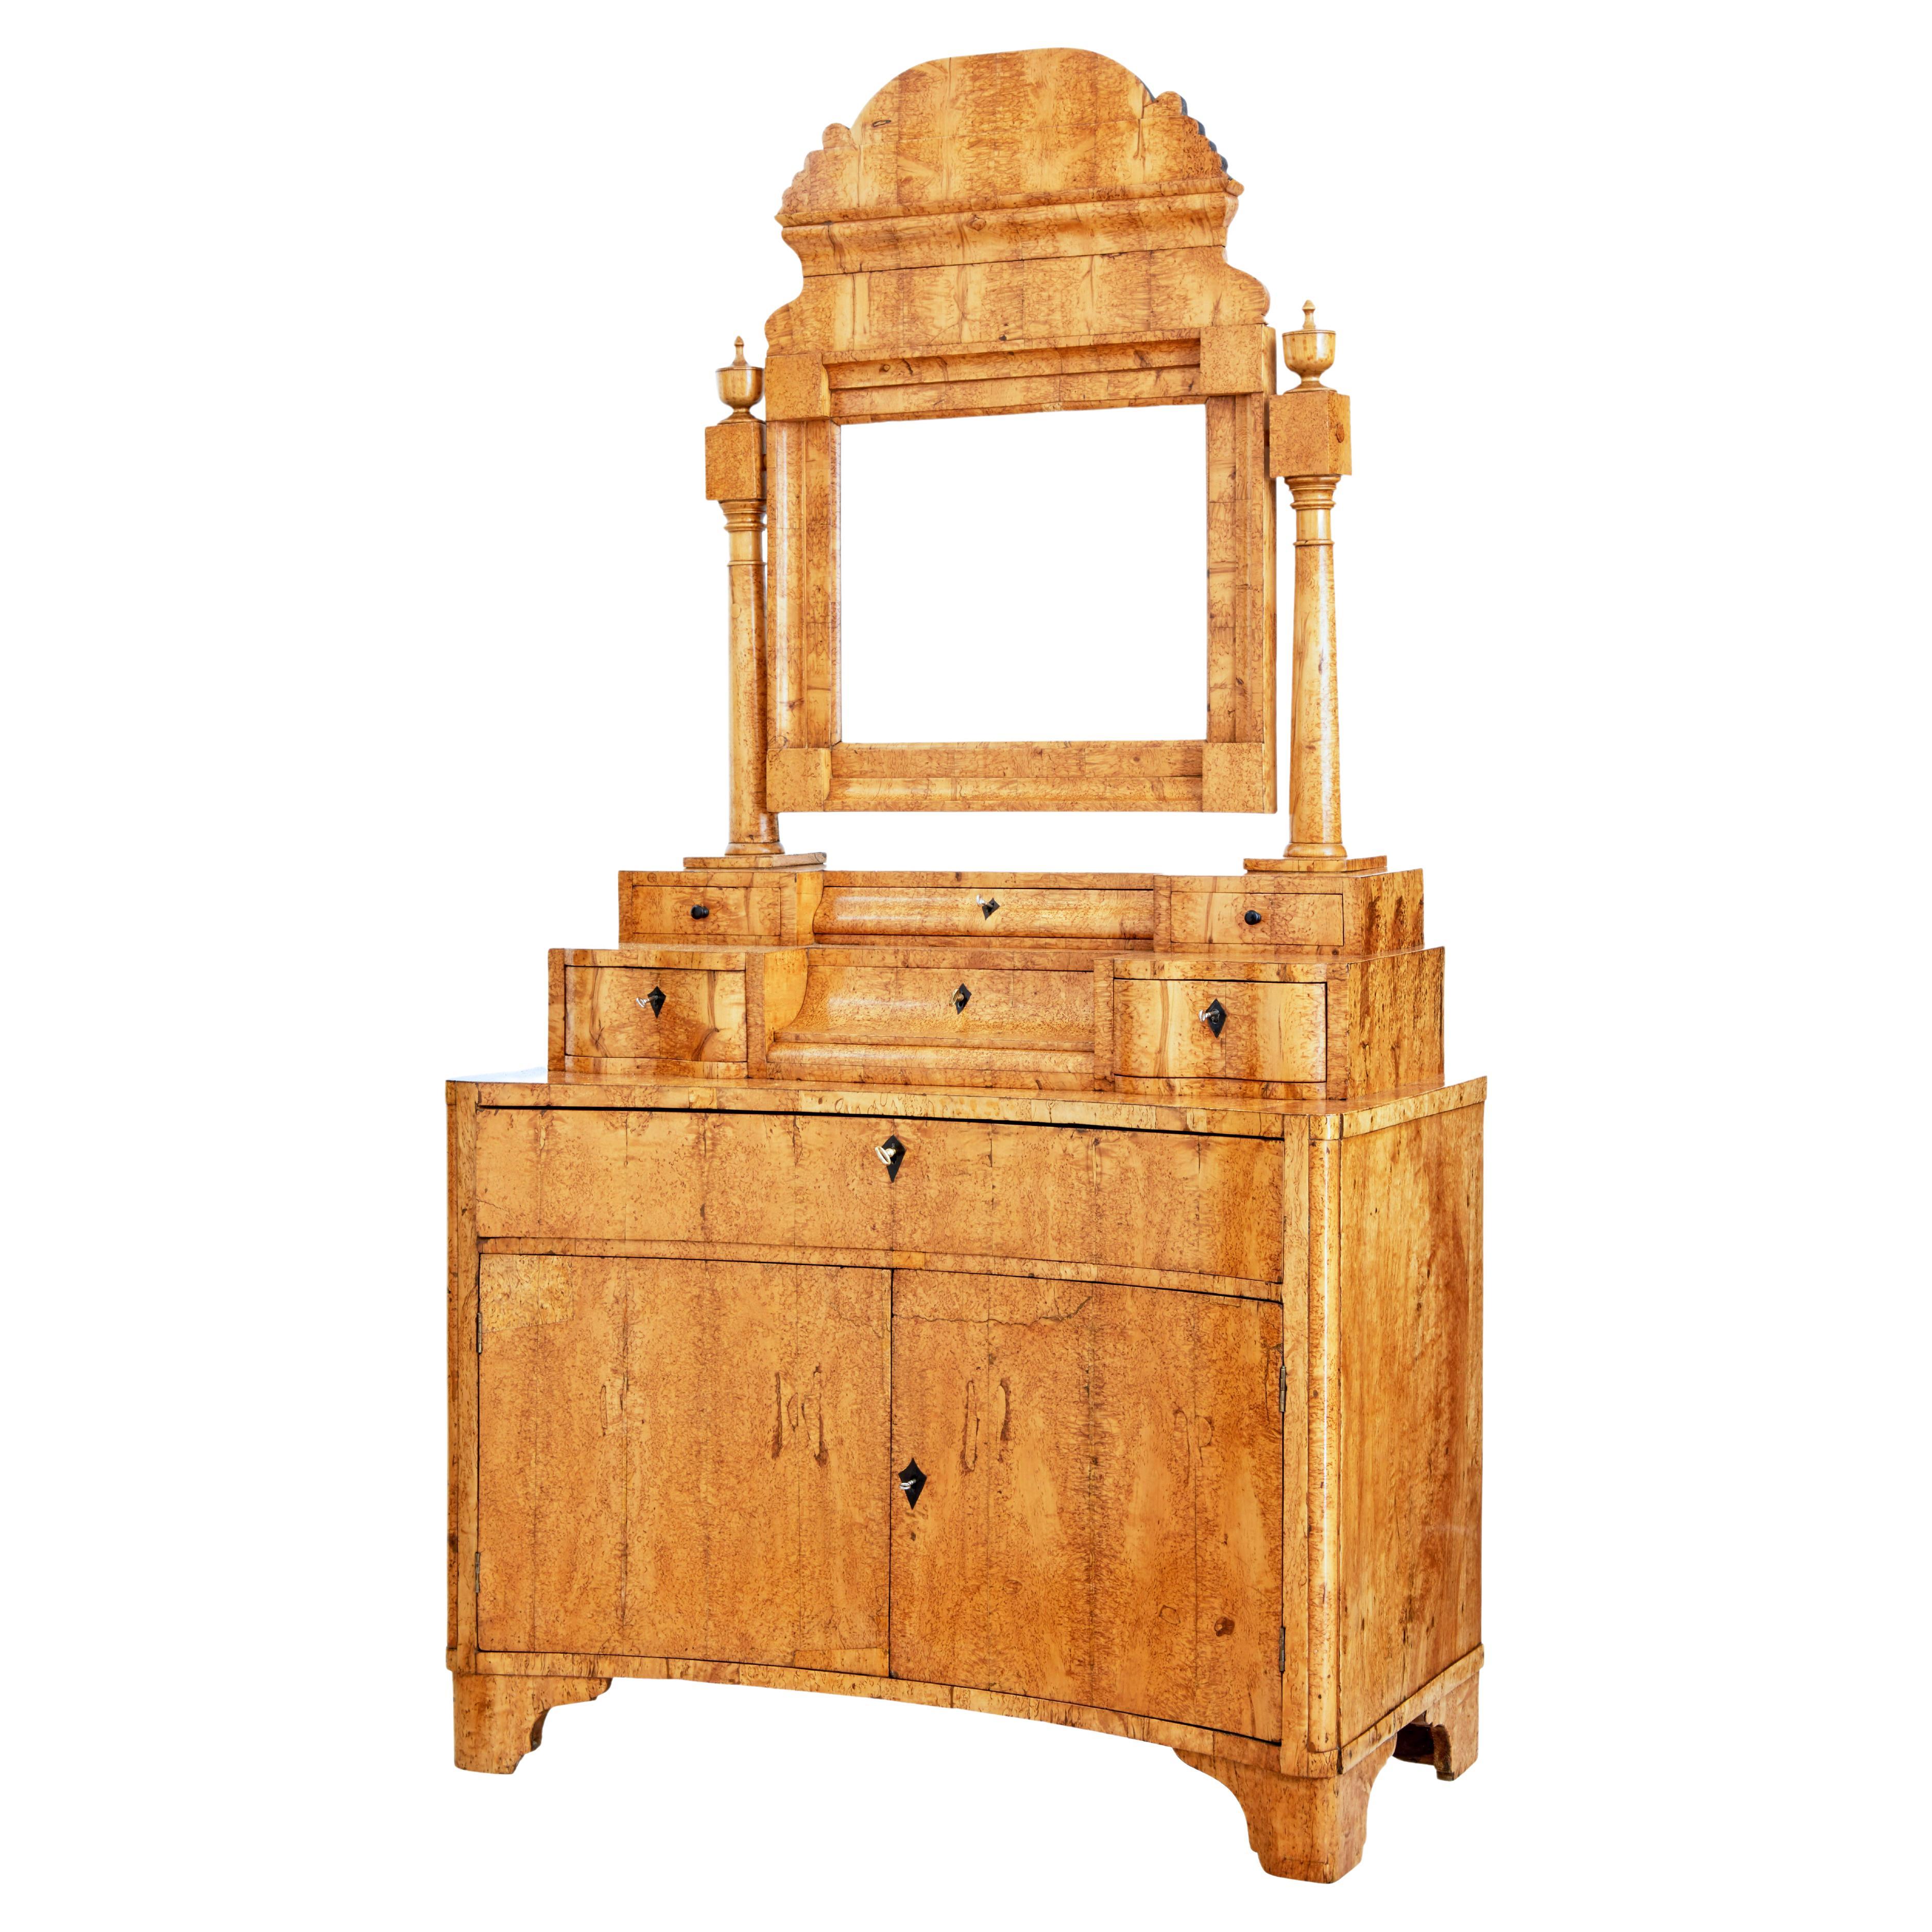 Early 19th century birch biedermeier vanity dressing cabinet